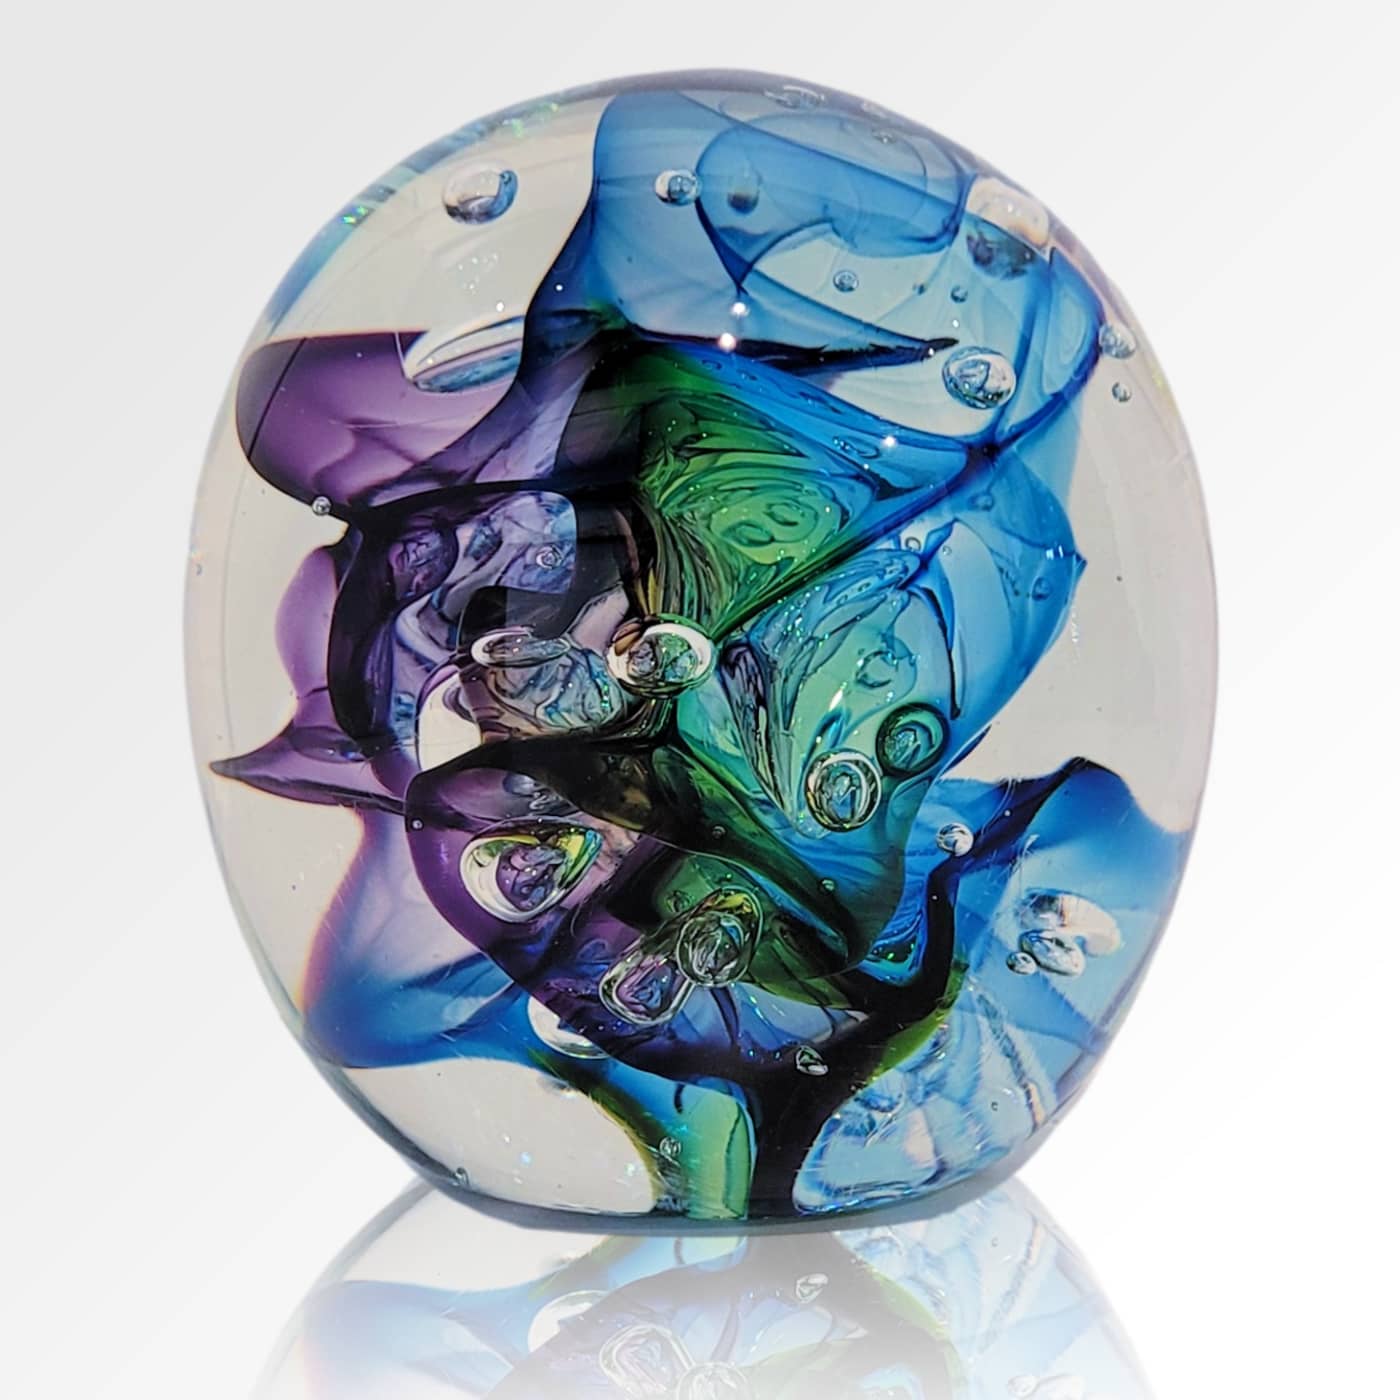 Peninsula-Based Australian Glass Artist Roberta Easton ~ 'Bubbly Sphere, Siren' - Curate Art & Design Gallery Sorrento Mornington Peninsula Melbourne